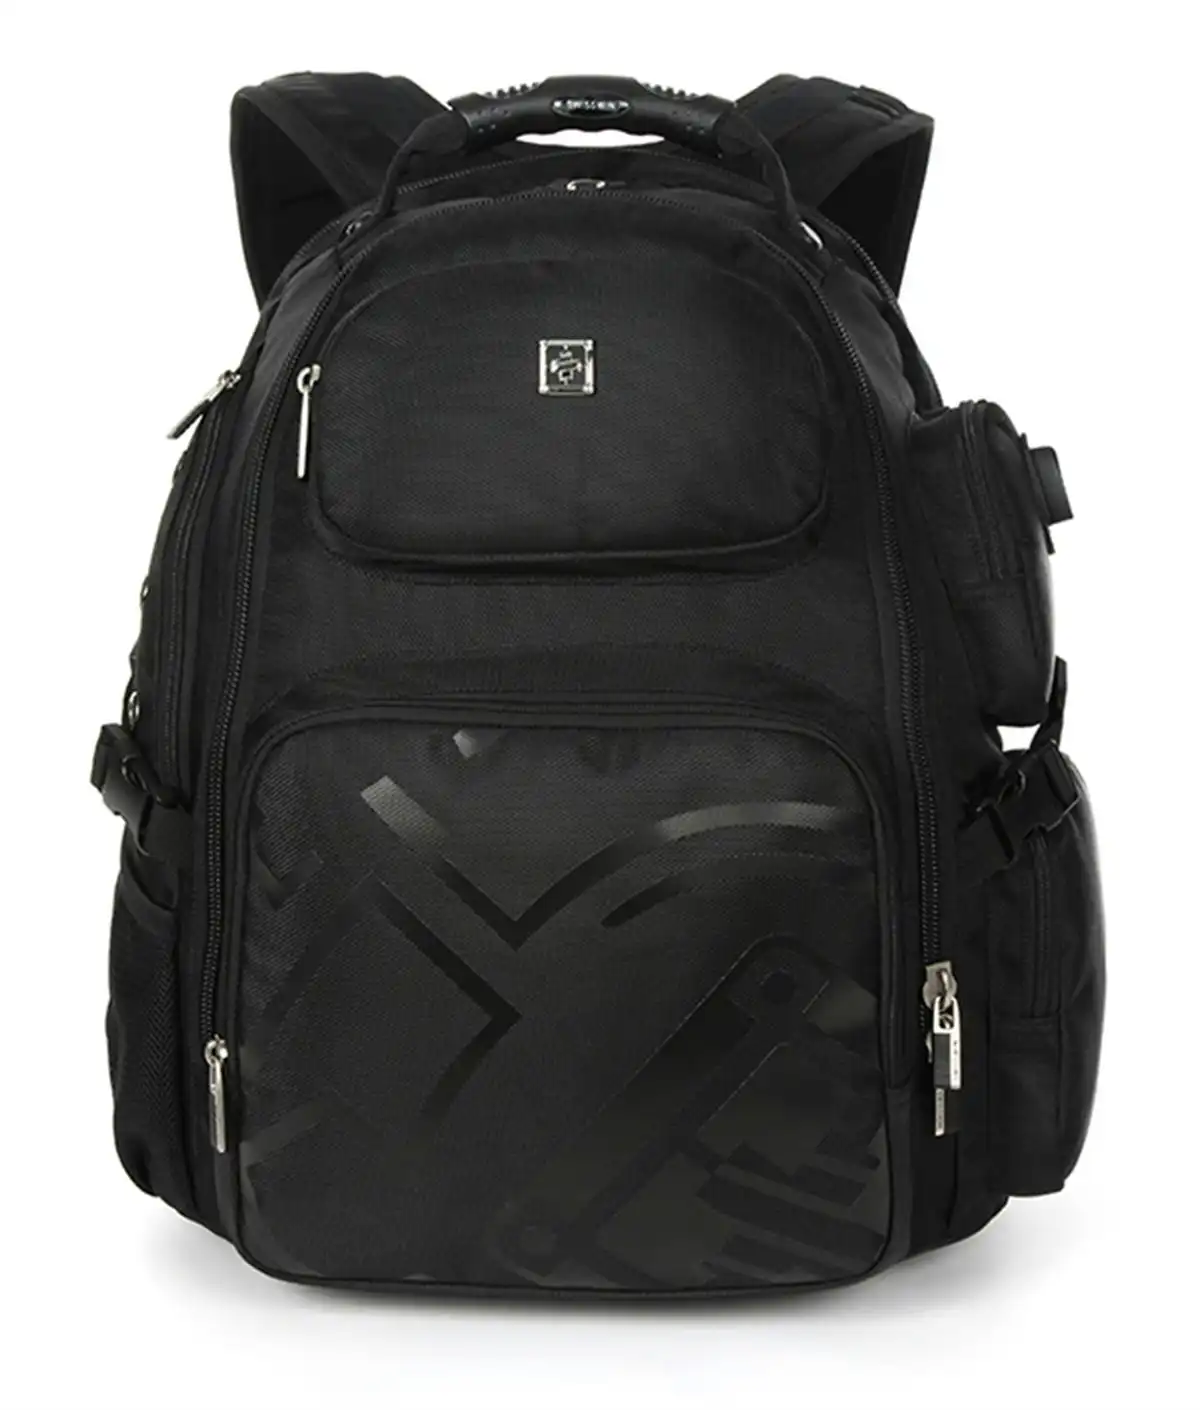 Swisswin Swiss Water-Resistant 15.6" laptop Backpack School backpack Travel Backpack SW09810 Black